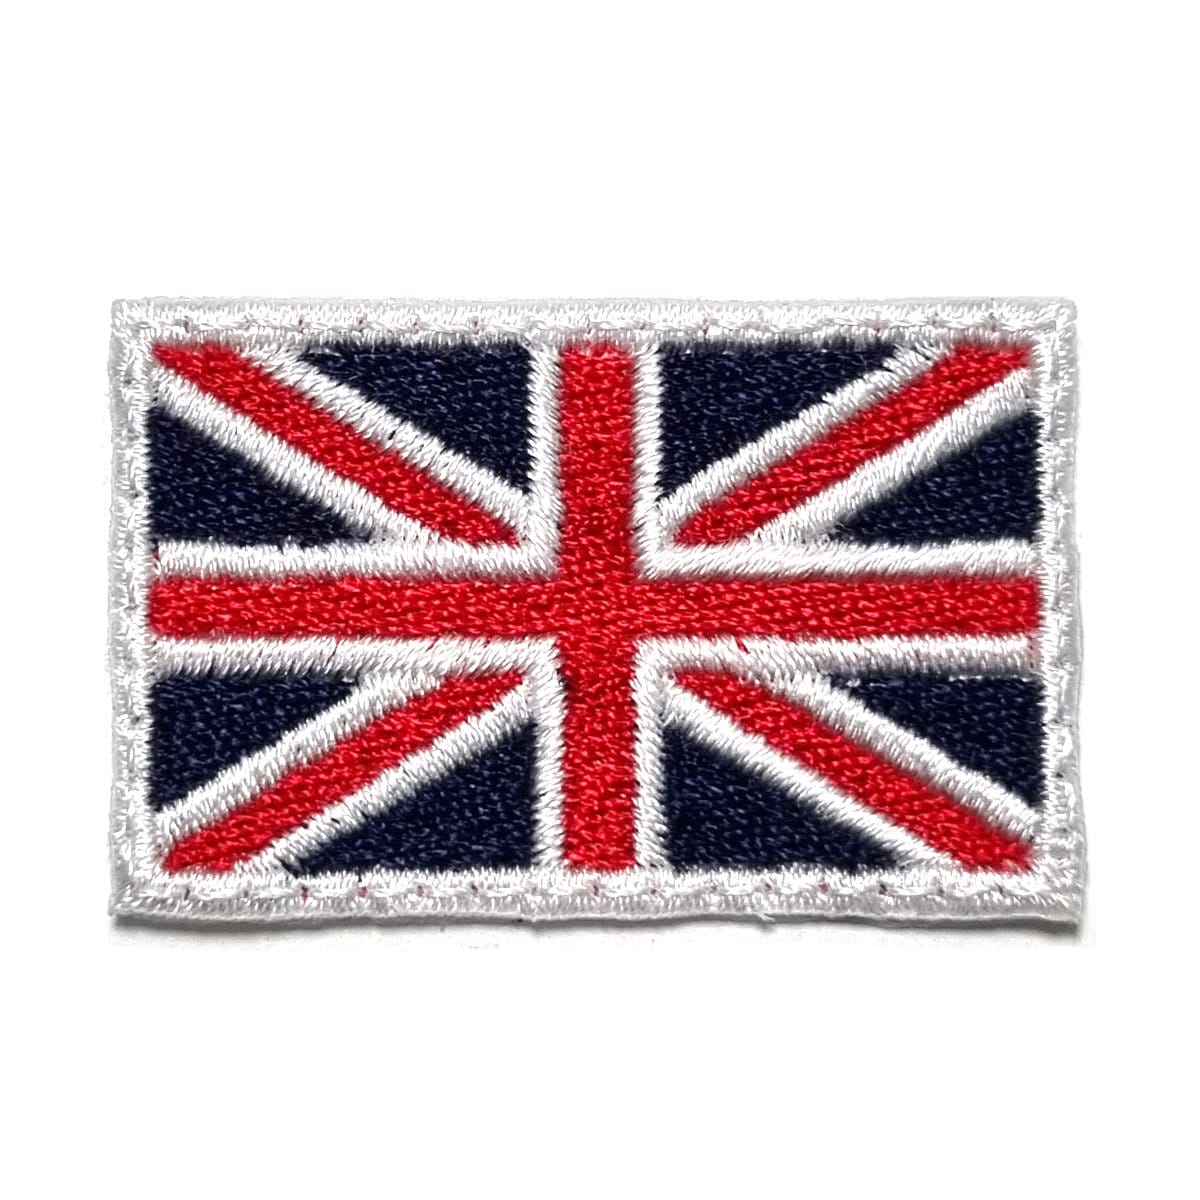 Eye-catching Union Jack England UK Flag Patch Print Stretch